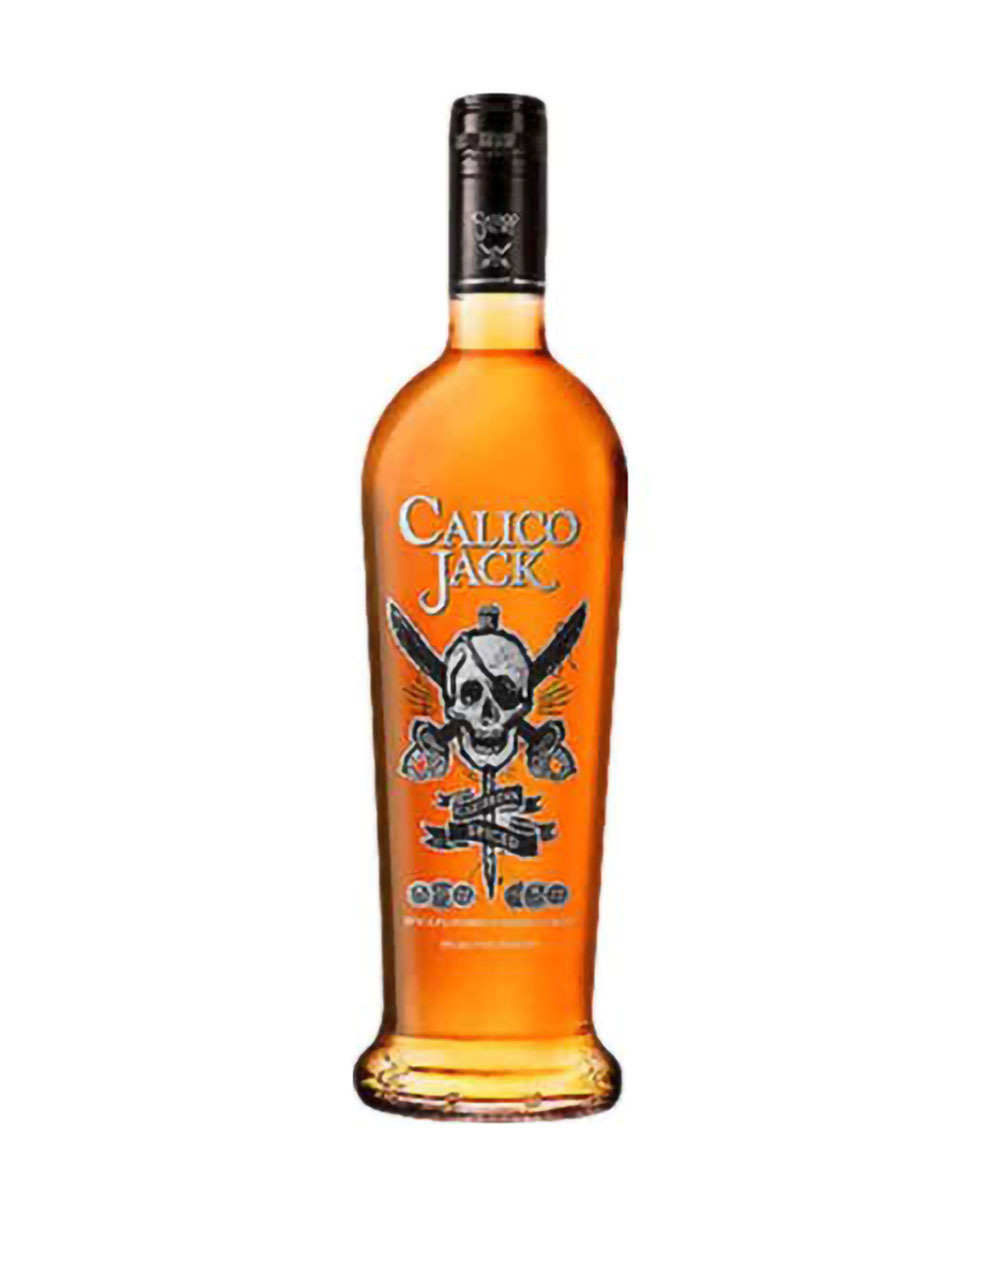 Calico Jack Spiced Rum